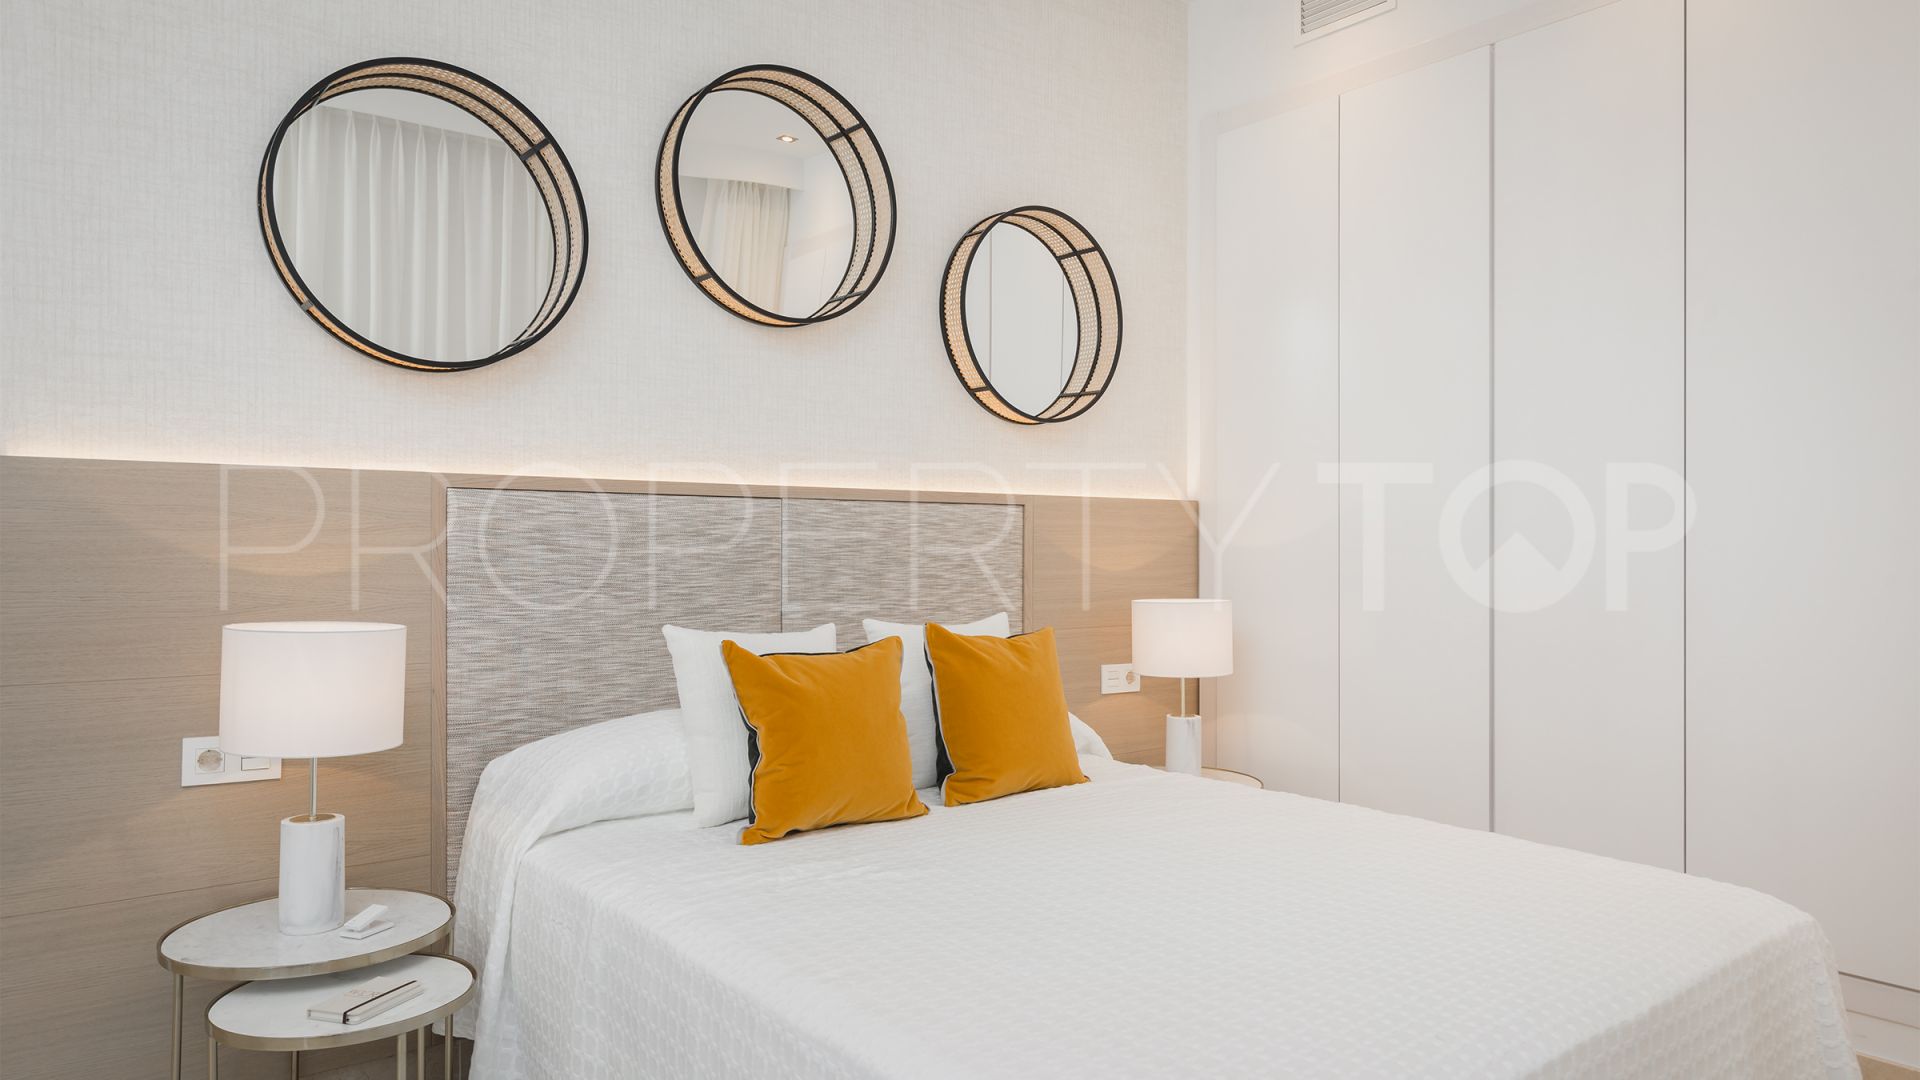 3 bedrooms ground floor apartment in El Paraiso for sale